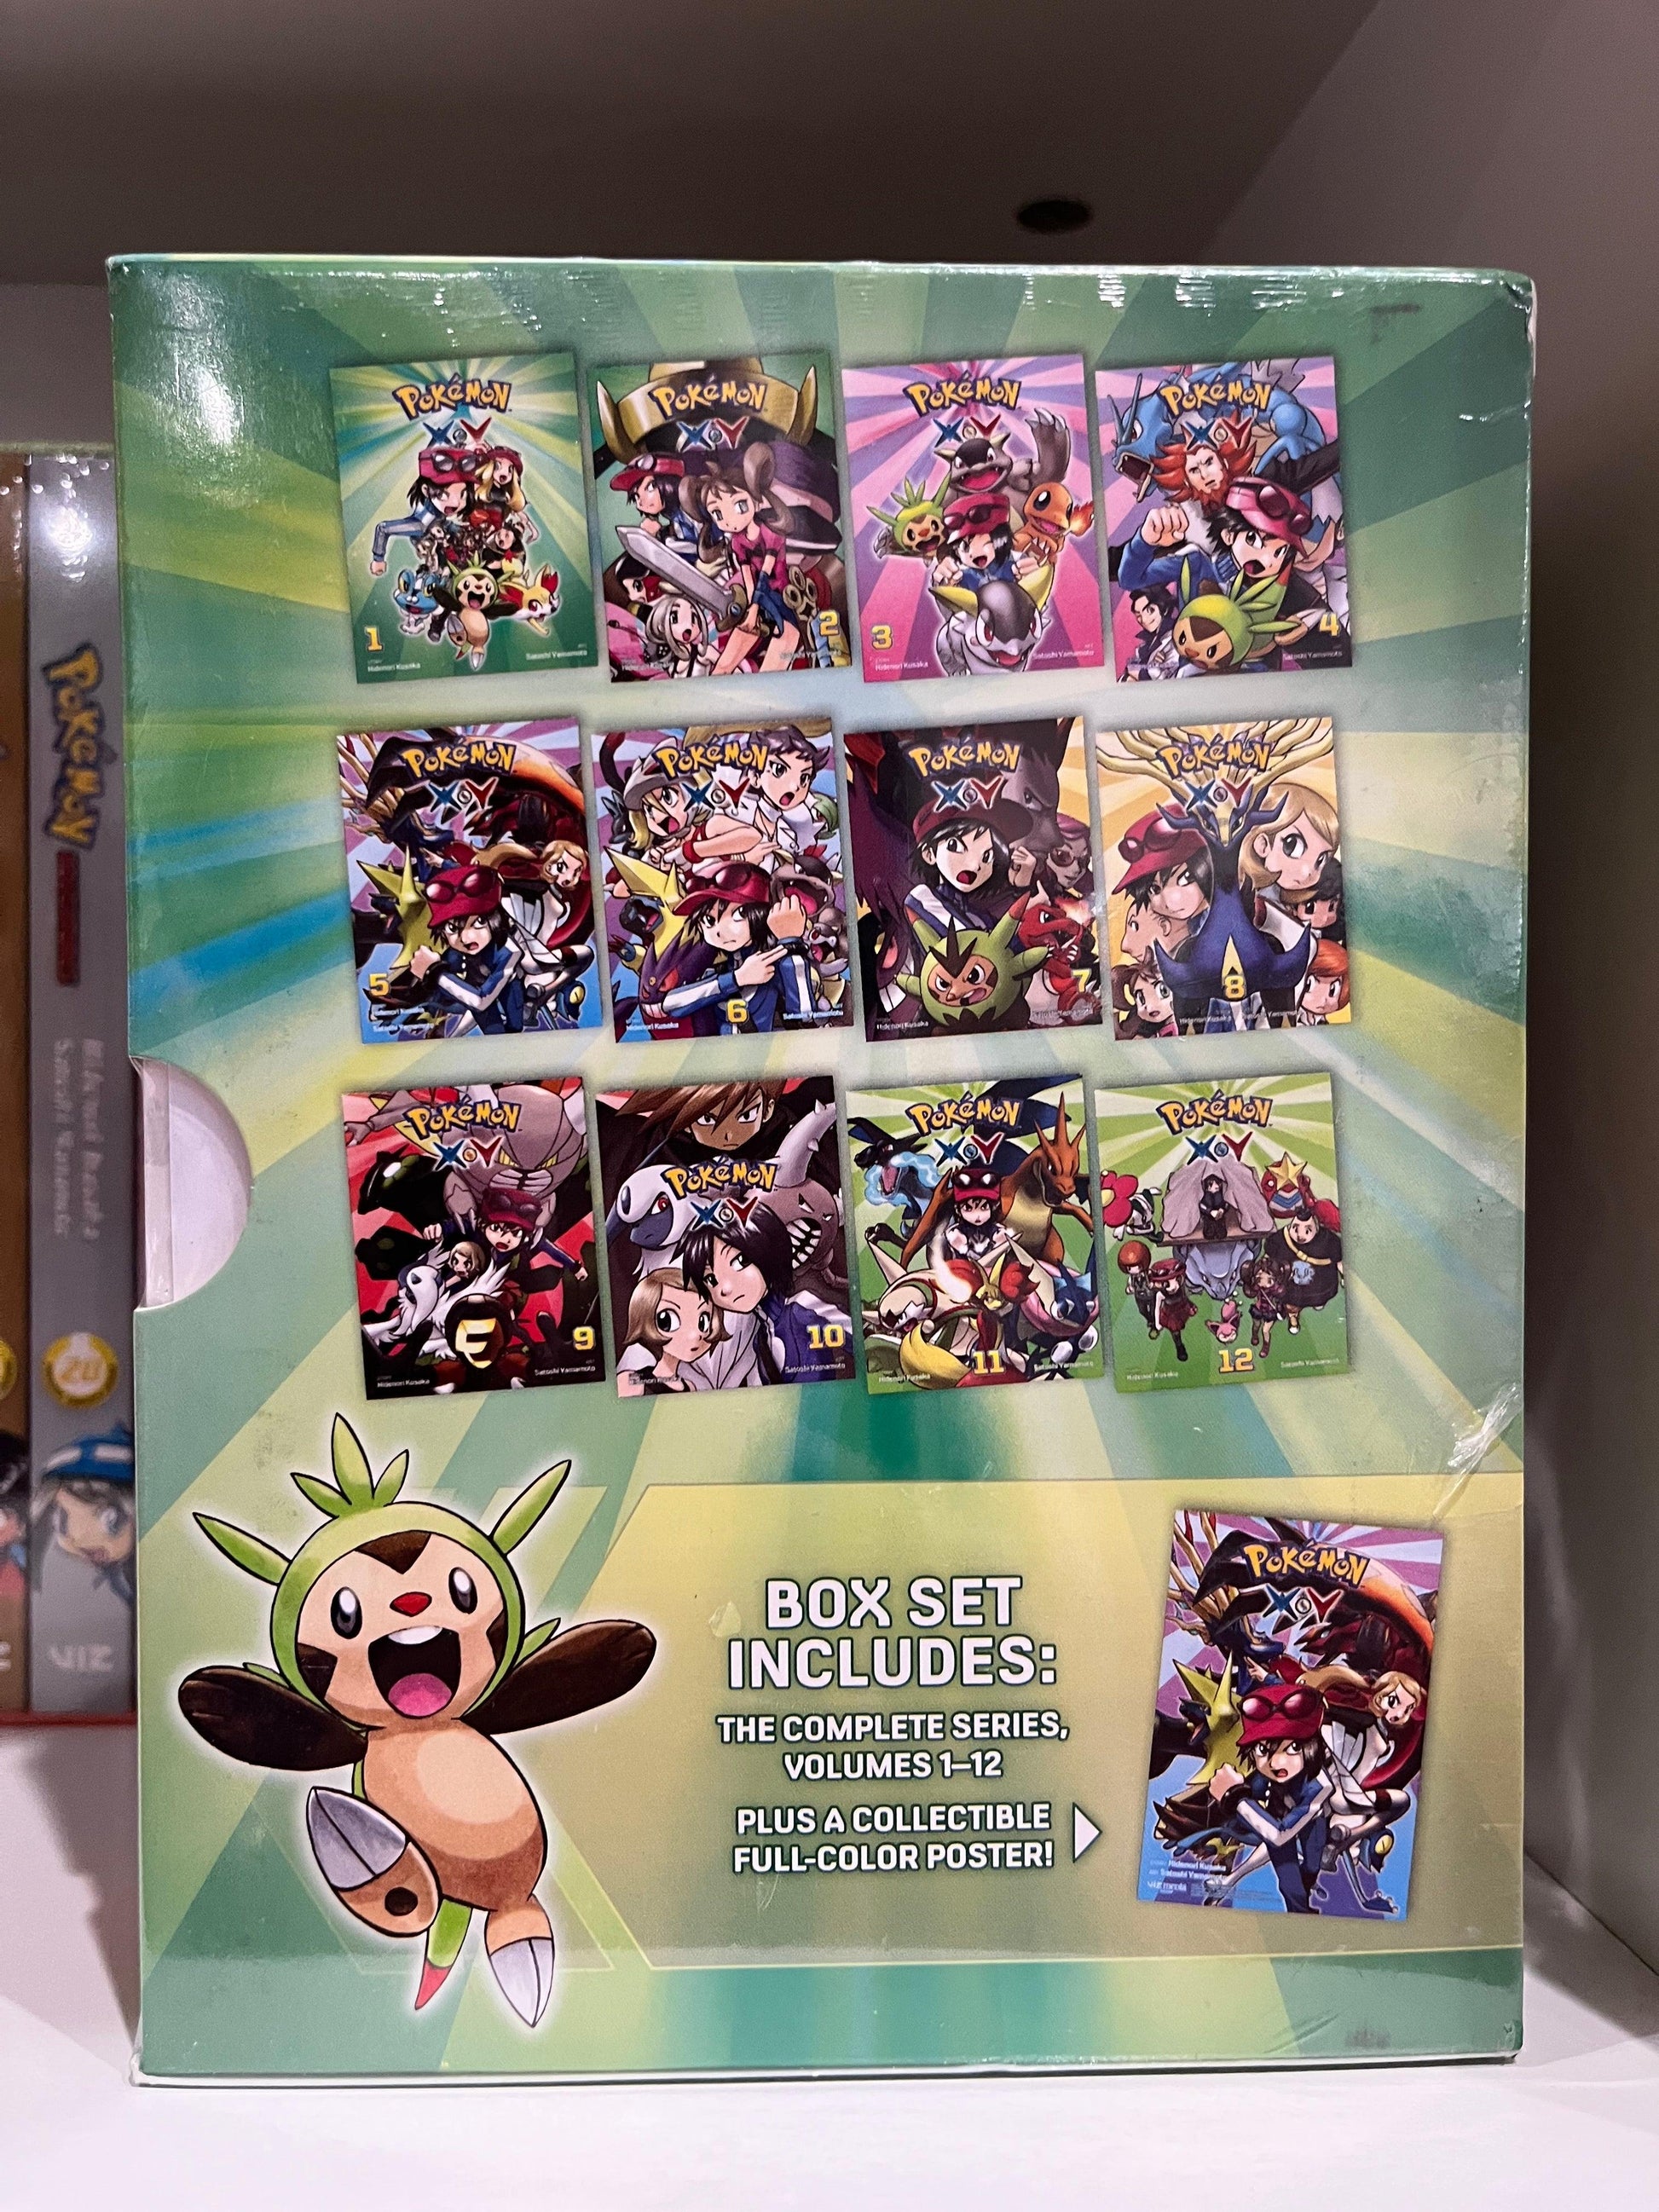 Pokémon Adventures v. 23-29 FireRed & LeafGreen Emerald Graphic